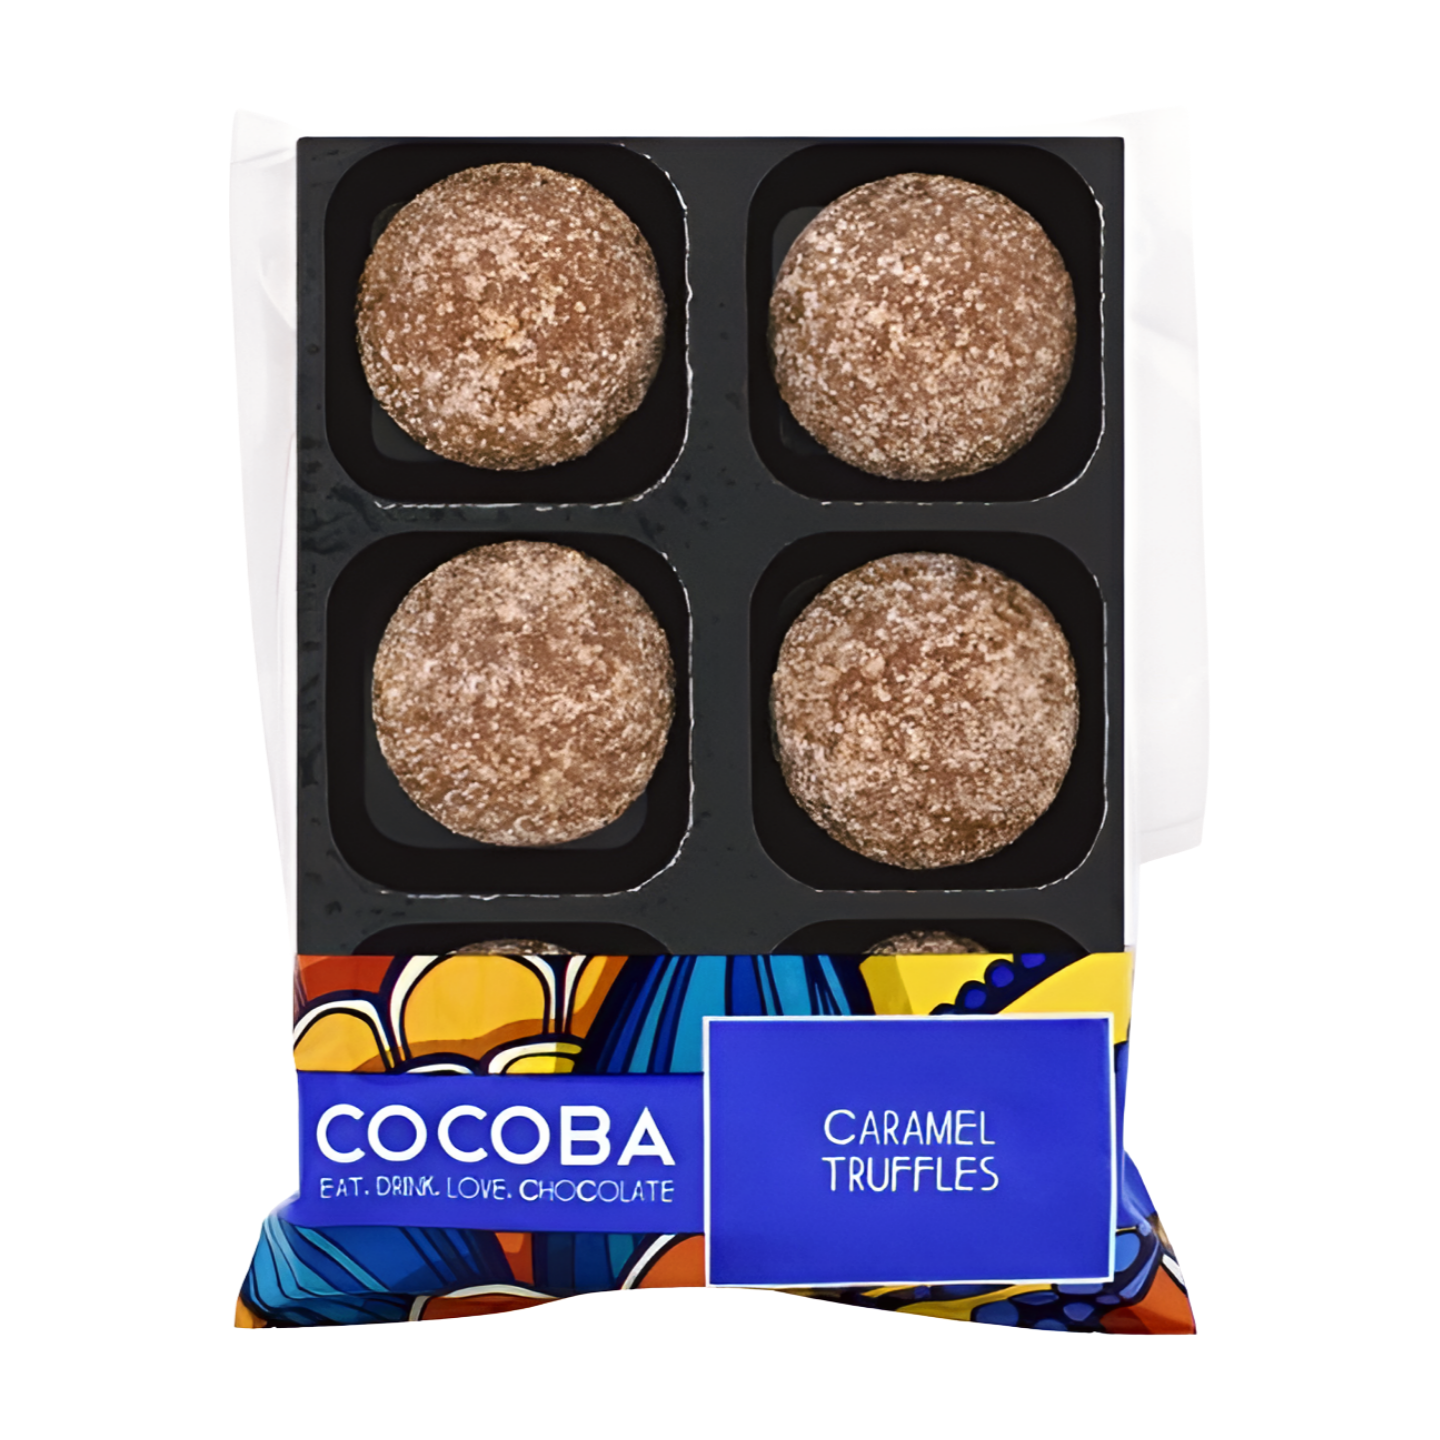 Cocoba Caramel Truffles (8x60g)